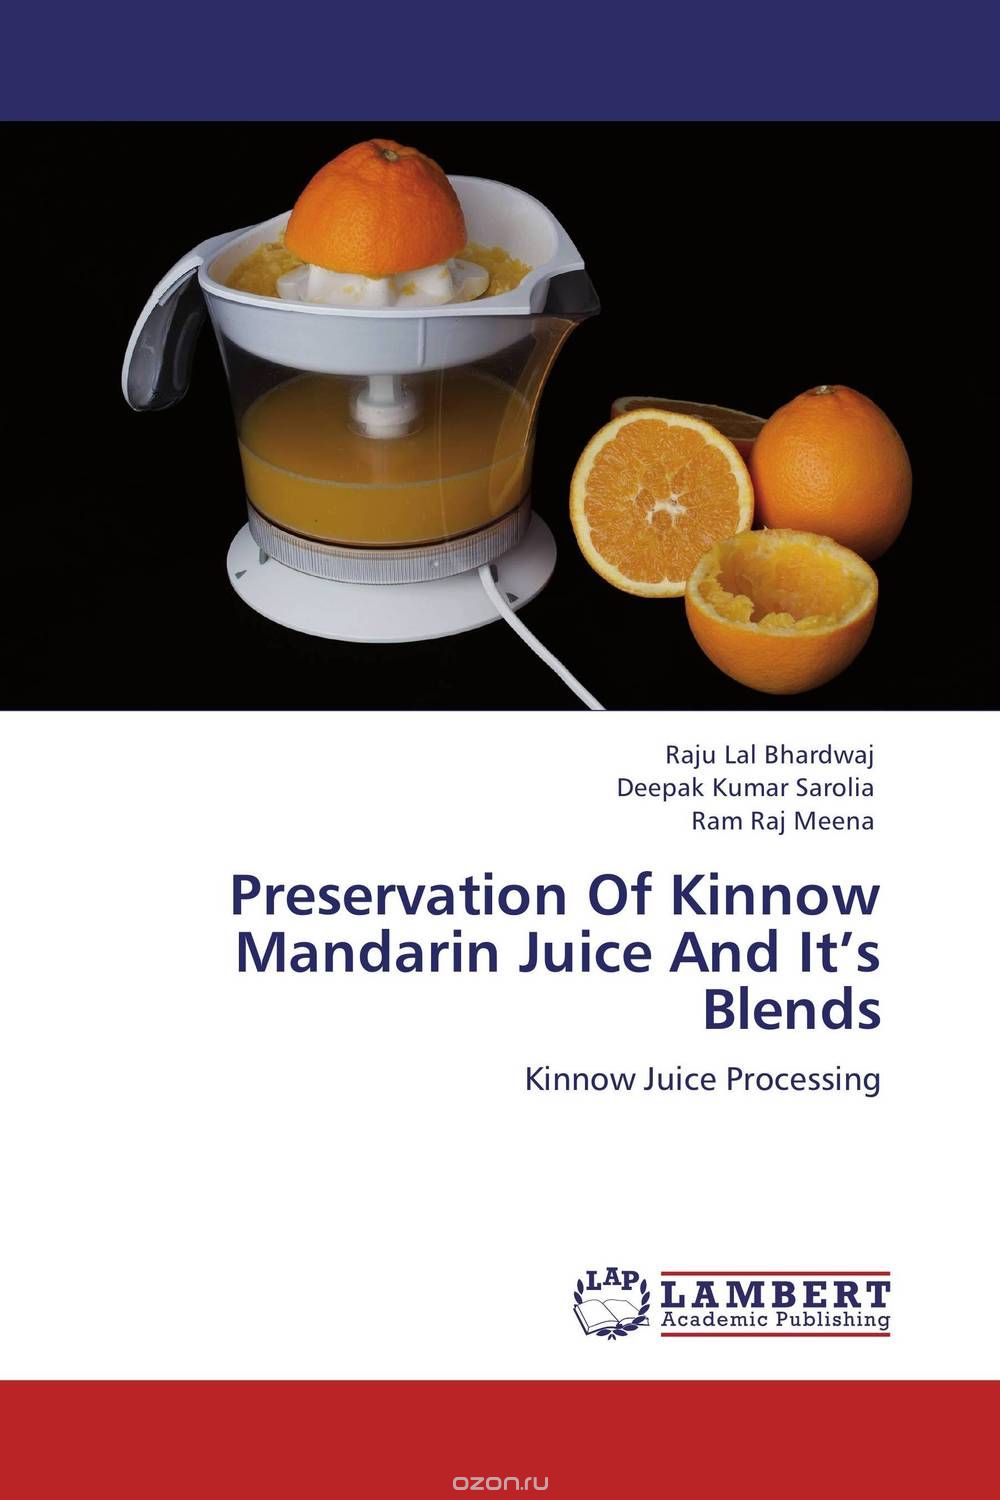 Скачать книгу "Preservation Of Kinnow Mandarin Juice And It’s Blends"